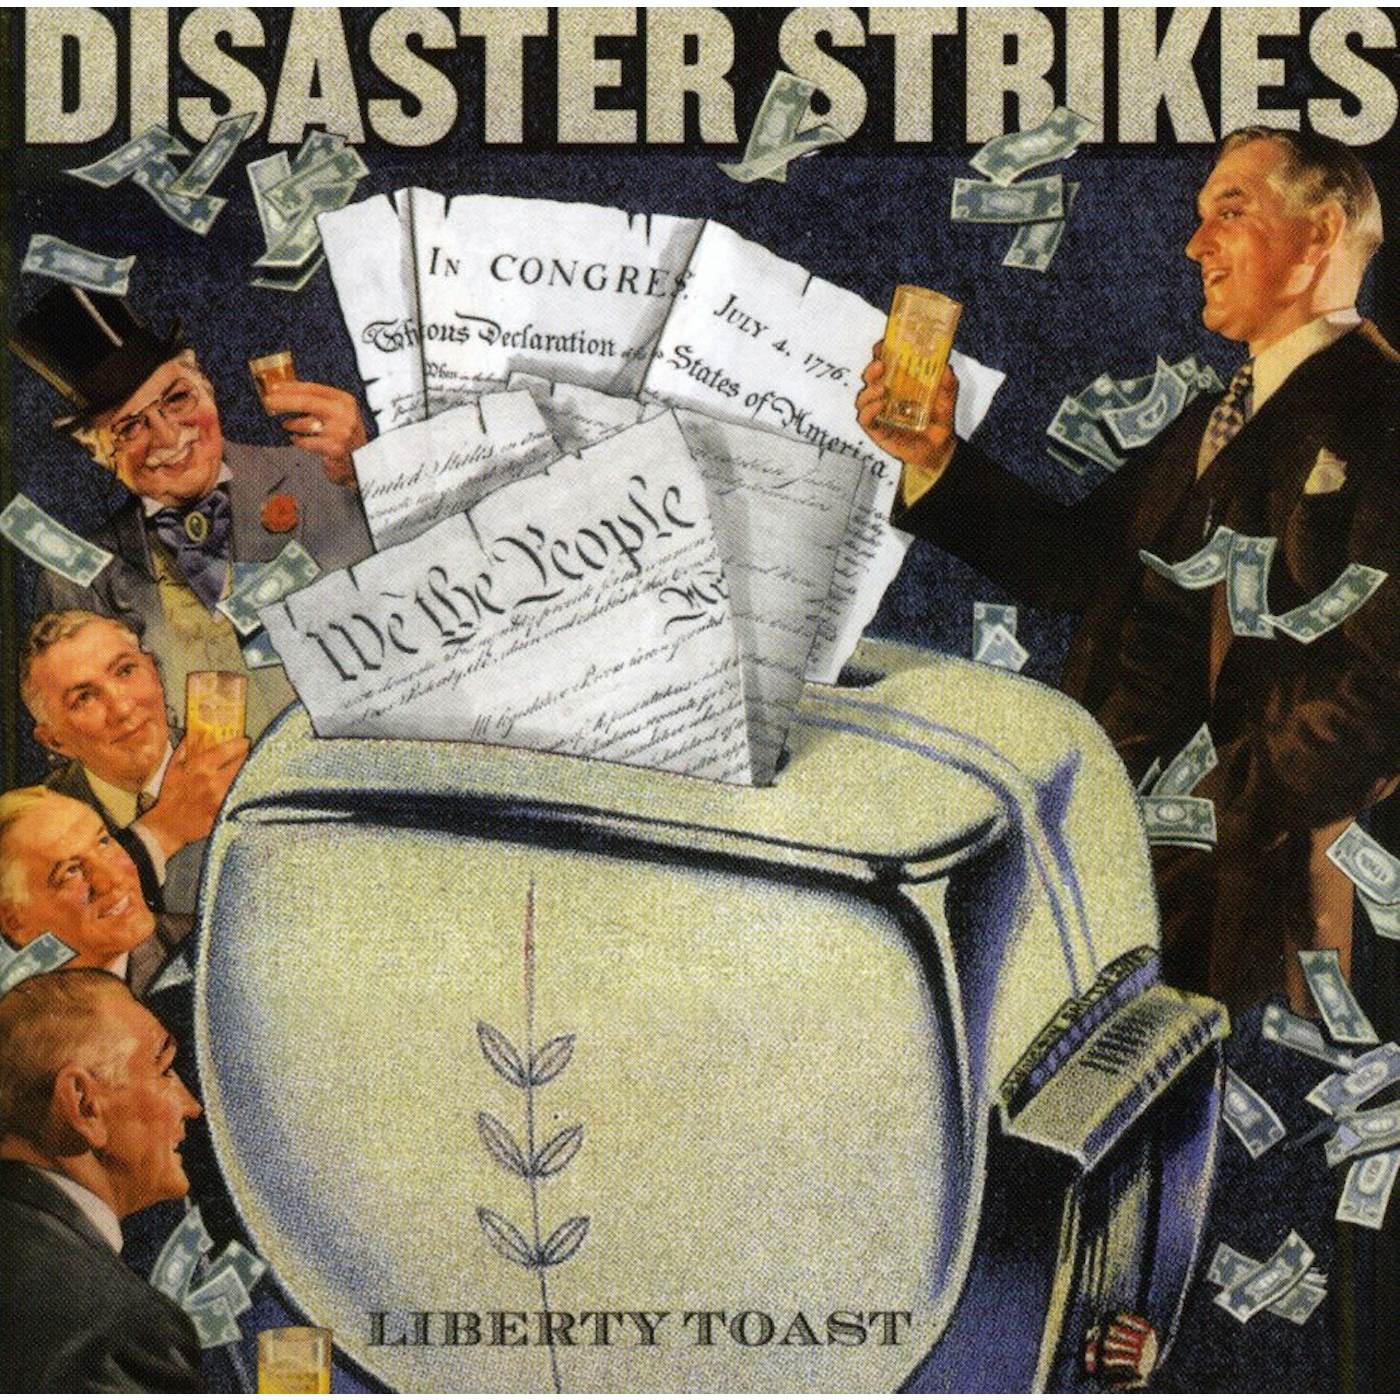 Disaster Strikes LIBERTY TOAST CD